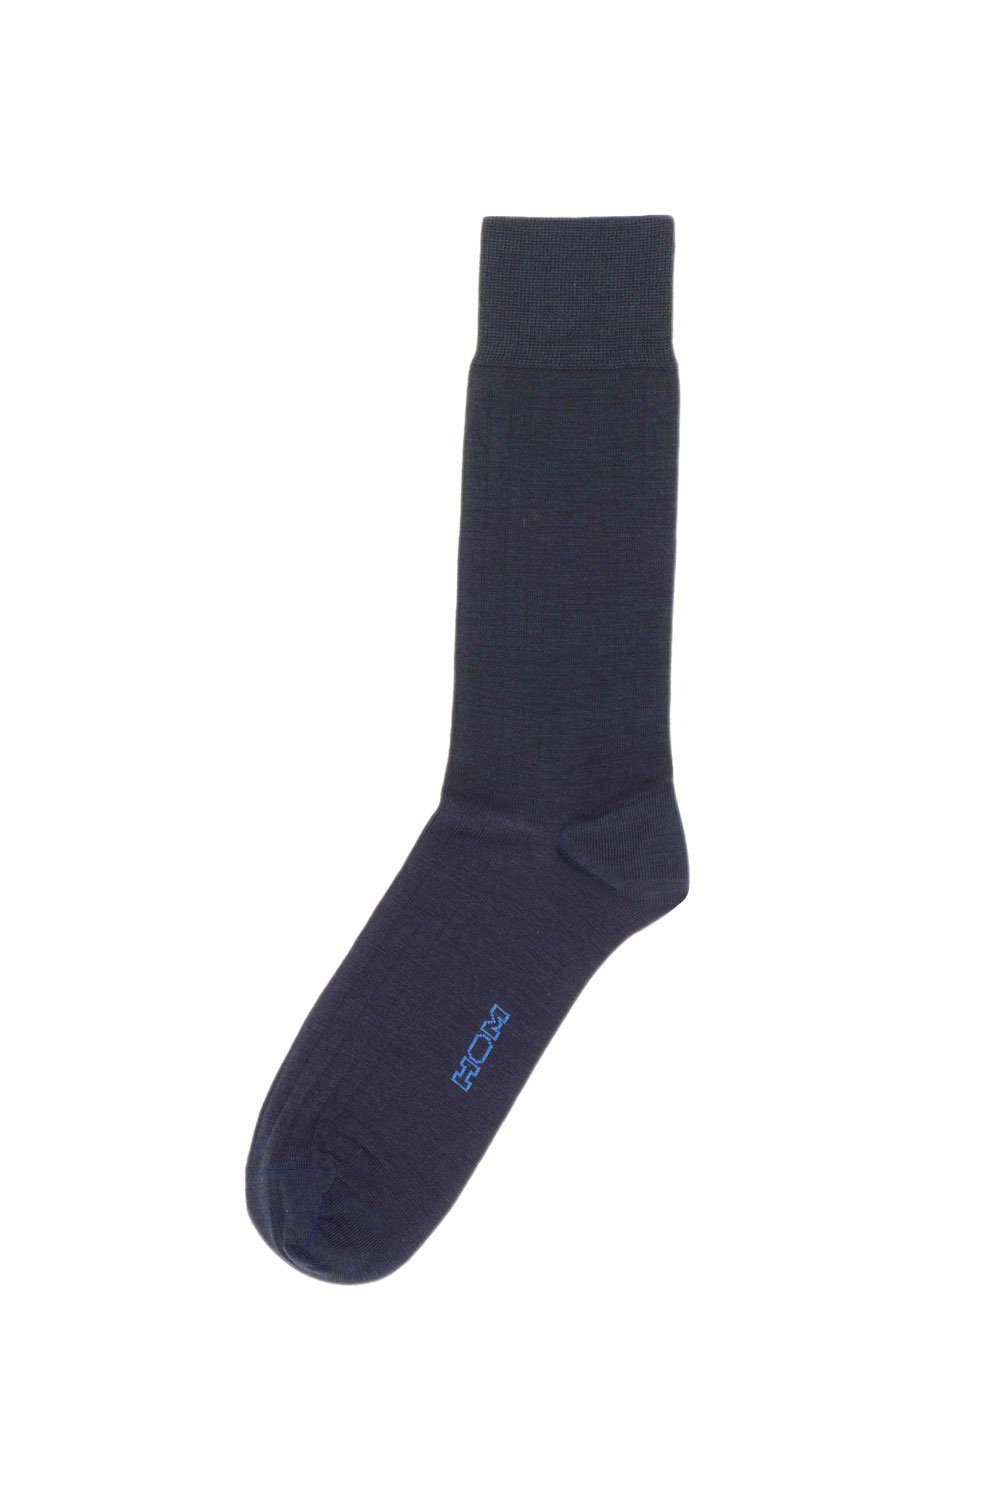 Hom Socken Socken Laine Coton navy 407548